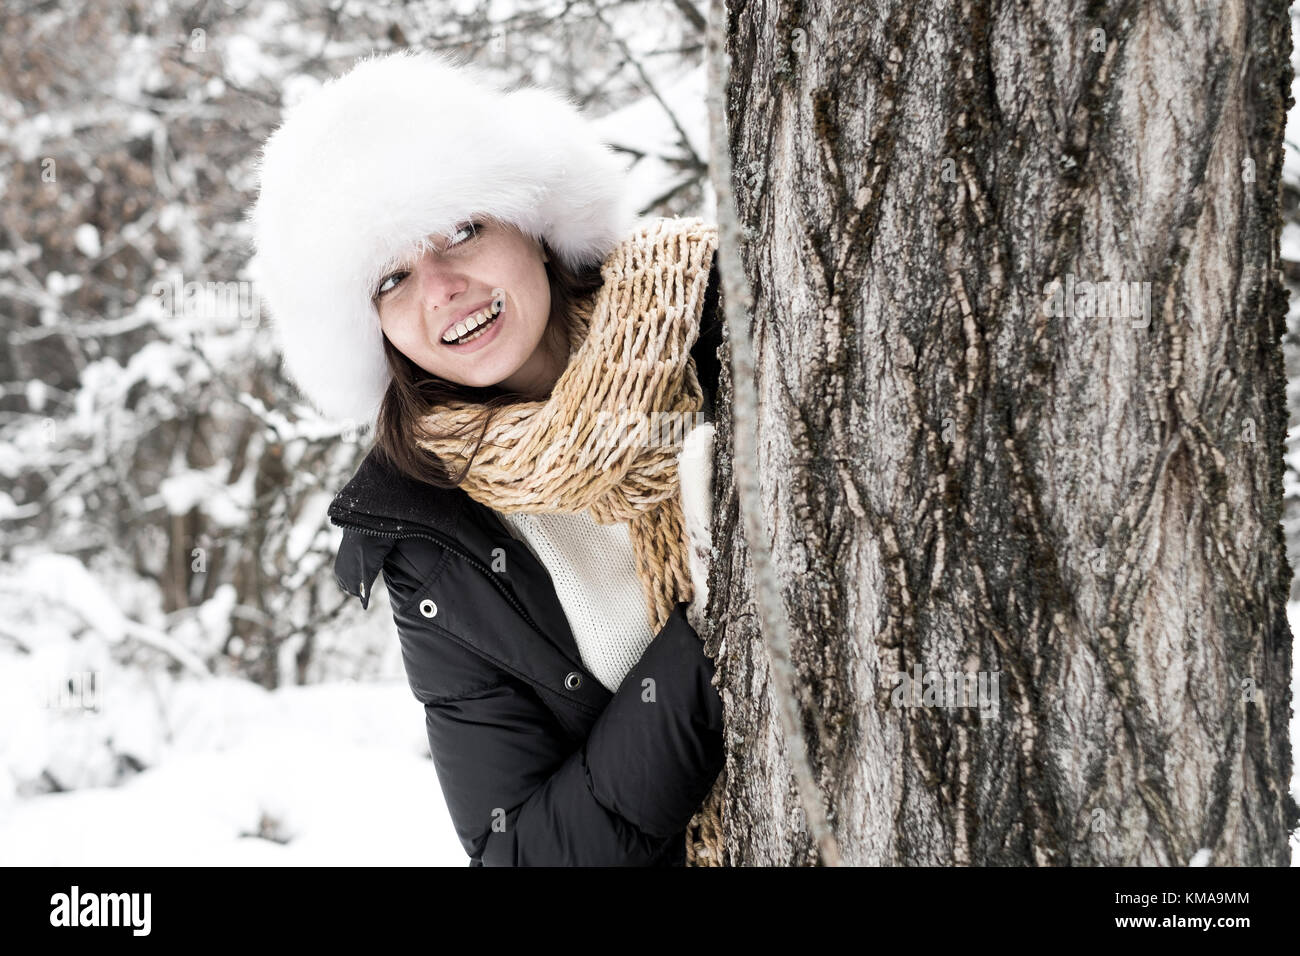 Portrait of smiling young woman wearing winter-vêtements Article cacher derrière tree in forest Banque D'Images